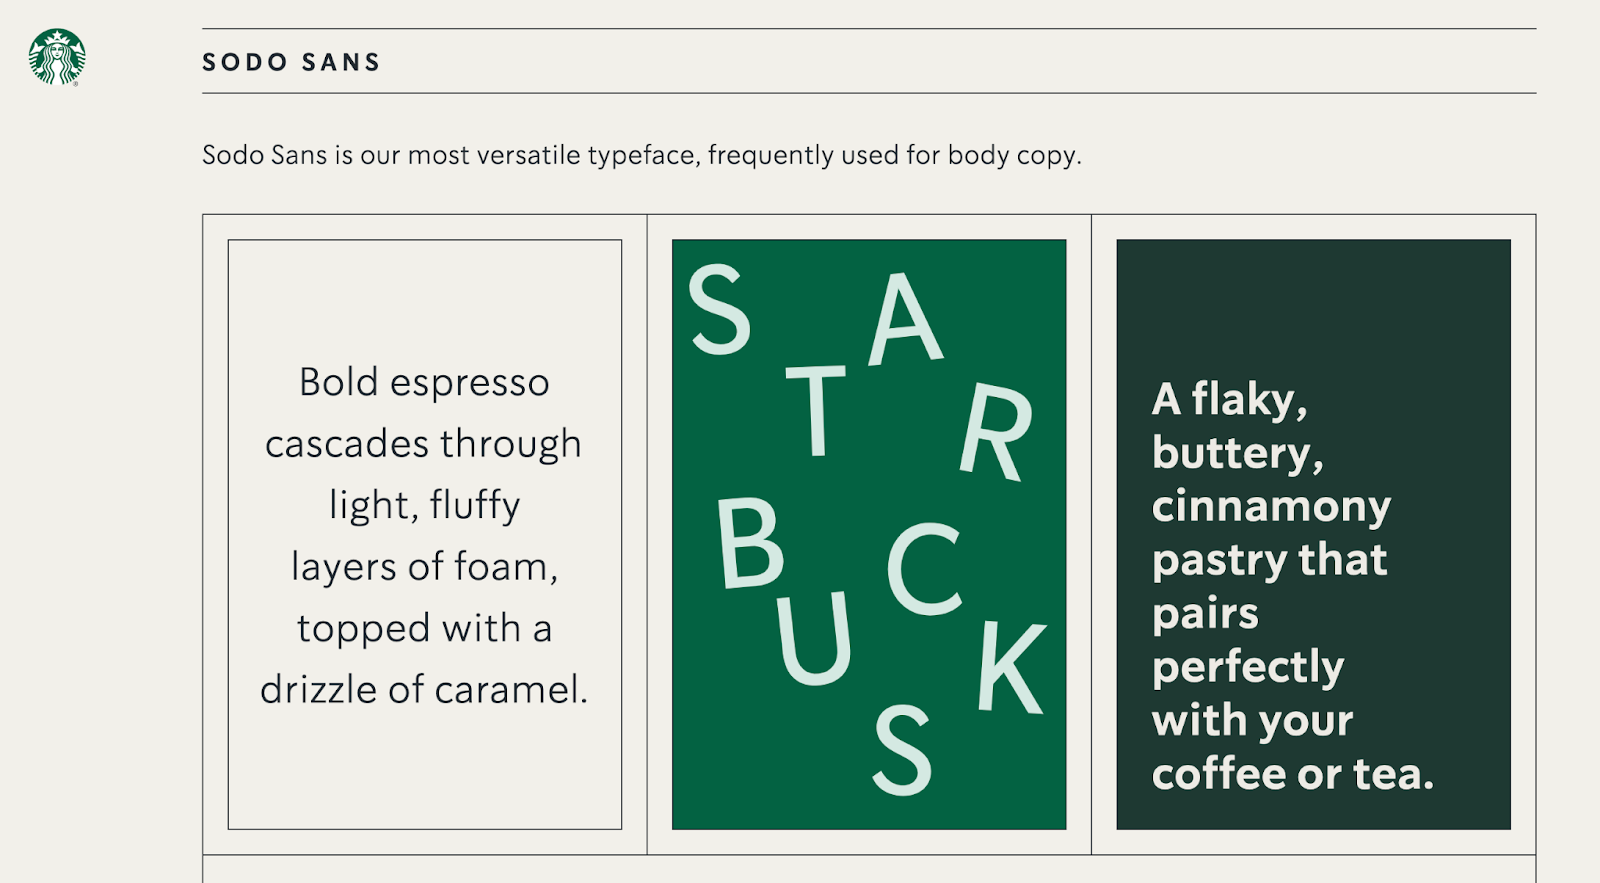 Directrices de la marca Starbucks